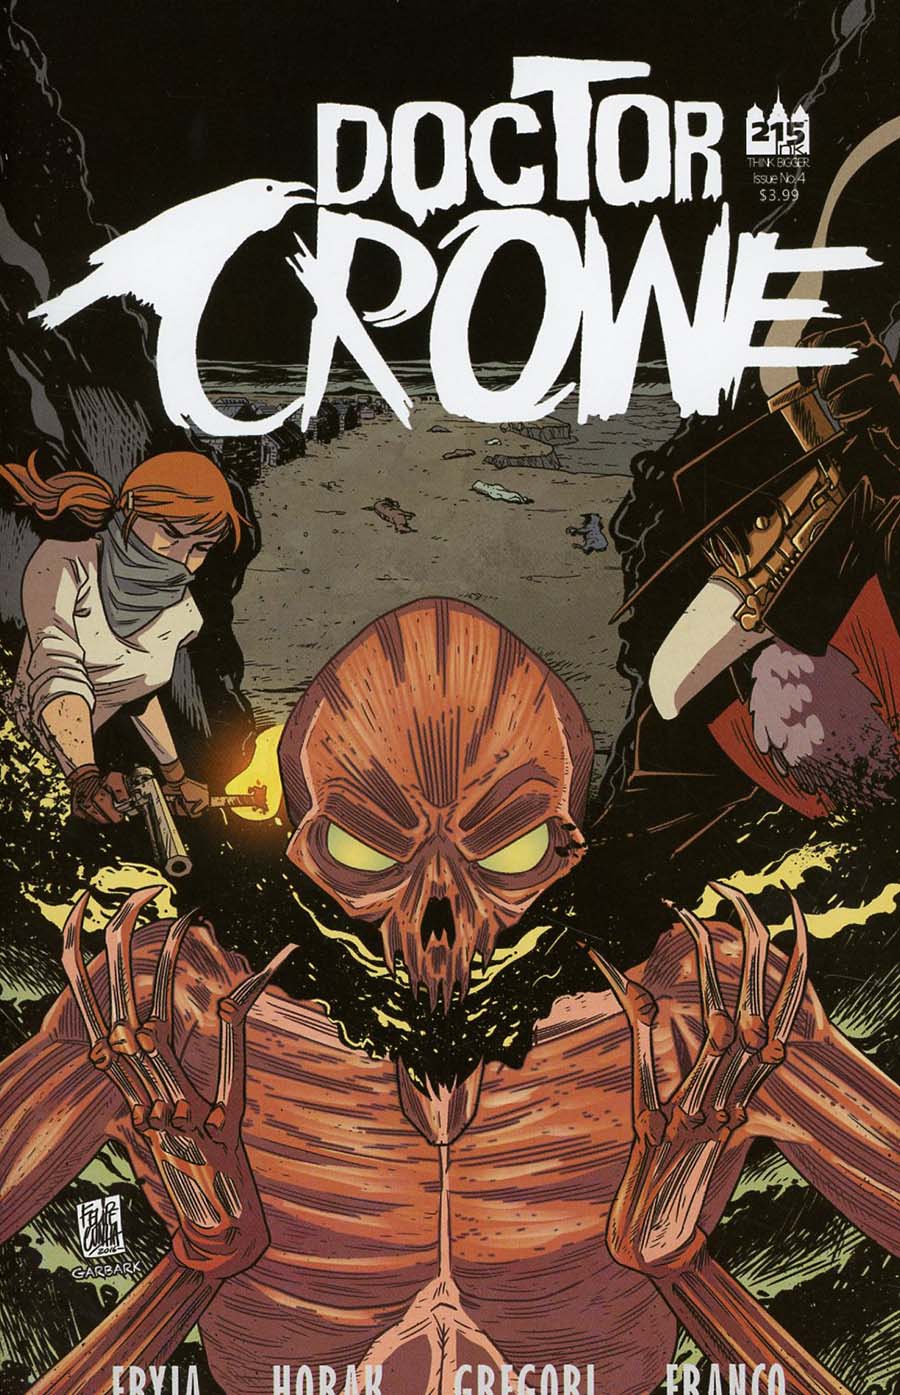 Doctor Crowe #4